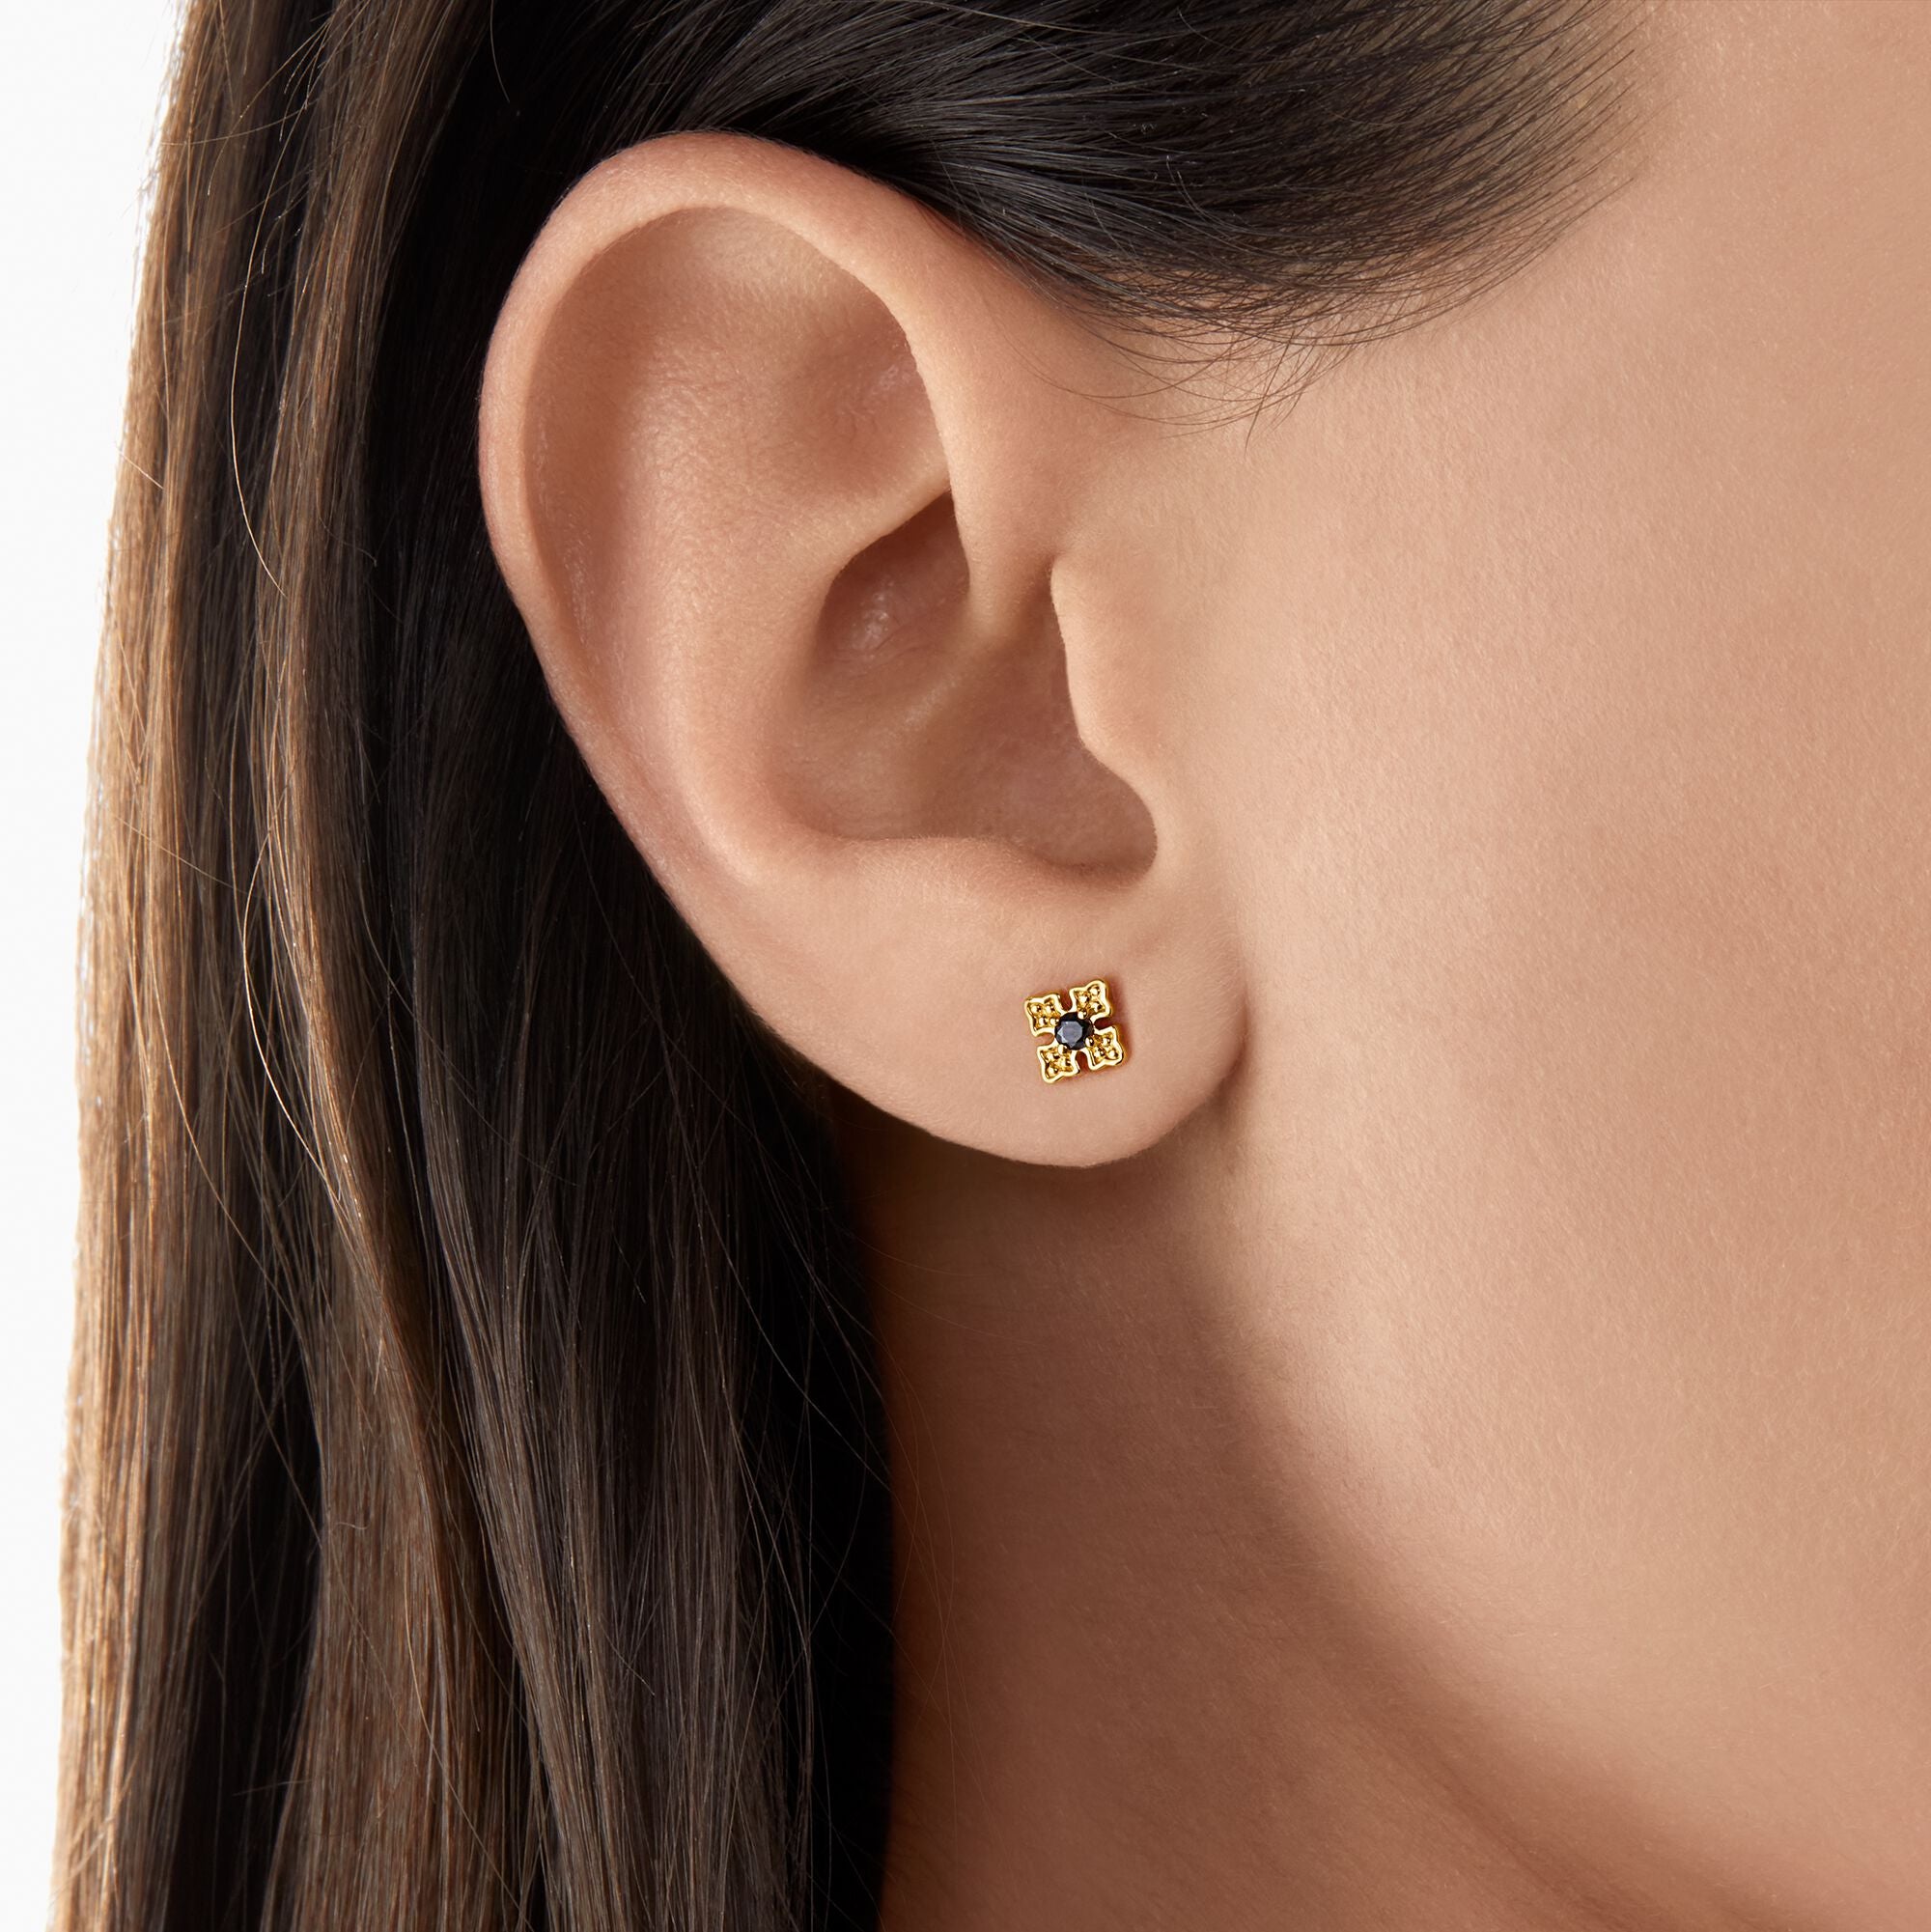 Thomas Sabo 18k Gold Plated Royalty Ear Studs on a woman's ear